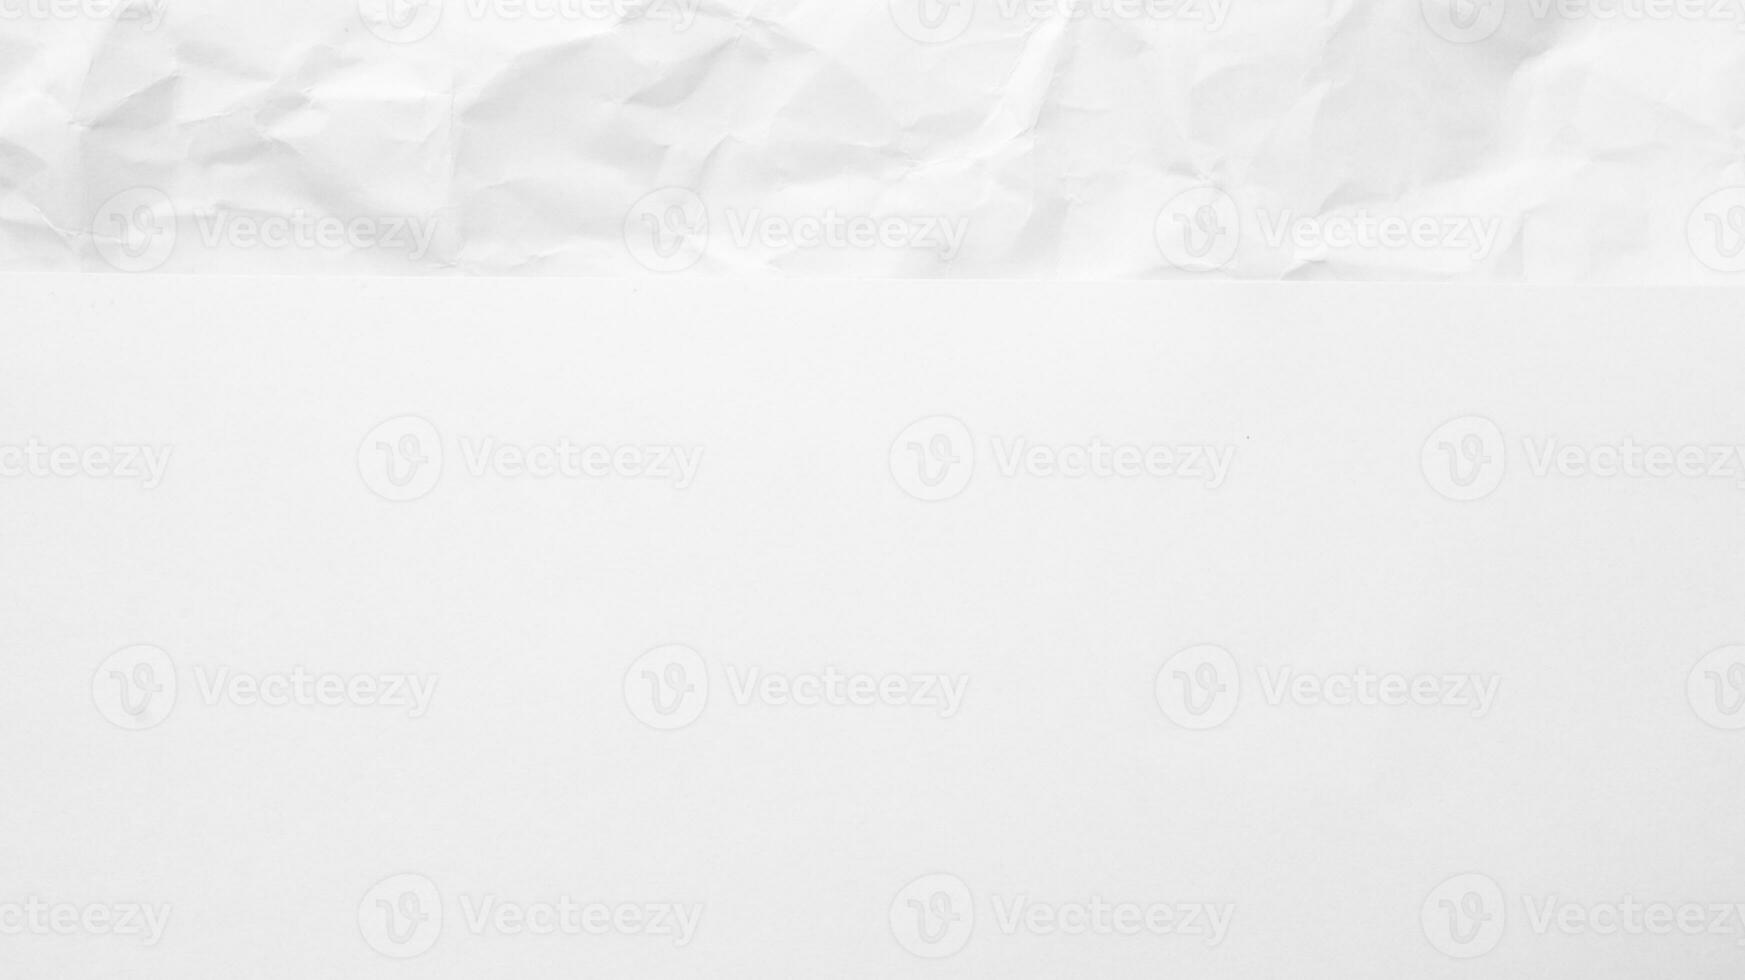 Weiß Papier Textur Hintergrund. zerknittert Weiß Papier abstrakt gestalten Hintergrund mit Raum Papier recyceln zum Text foto